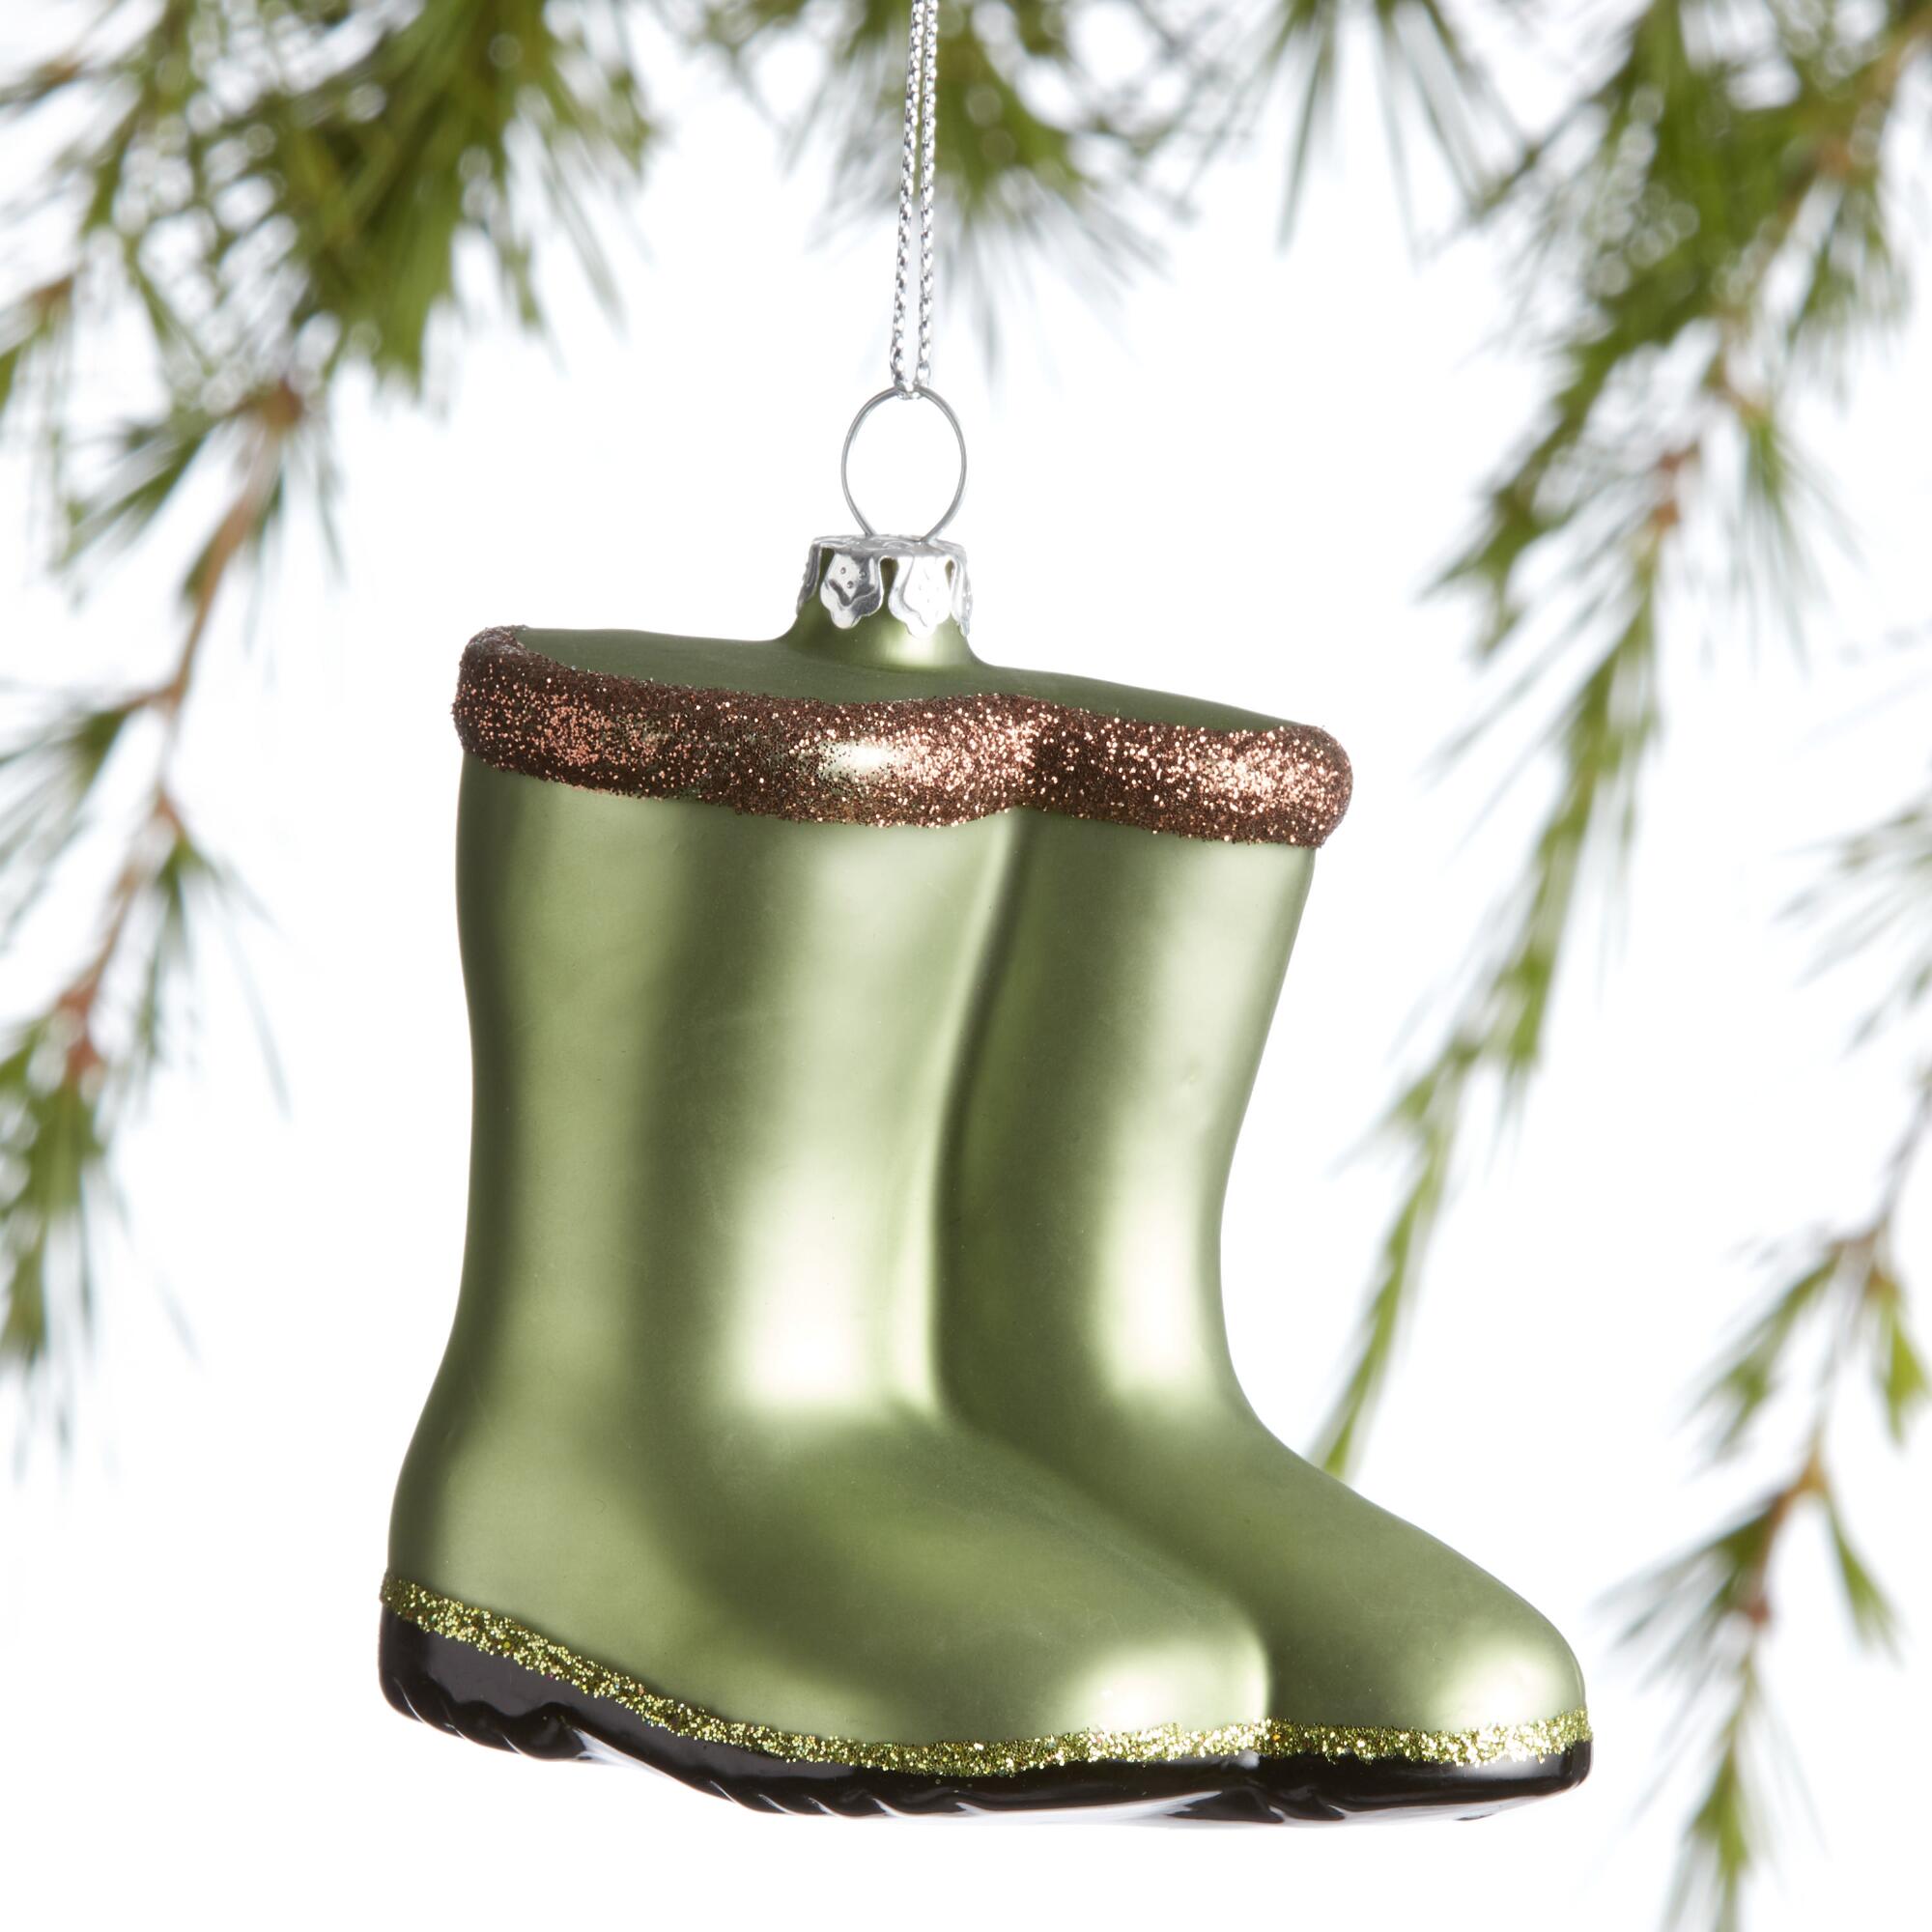 Glass Gardening Boots Ornament: Green by World Market